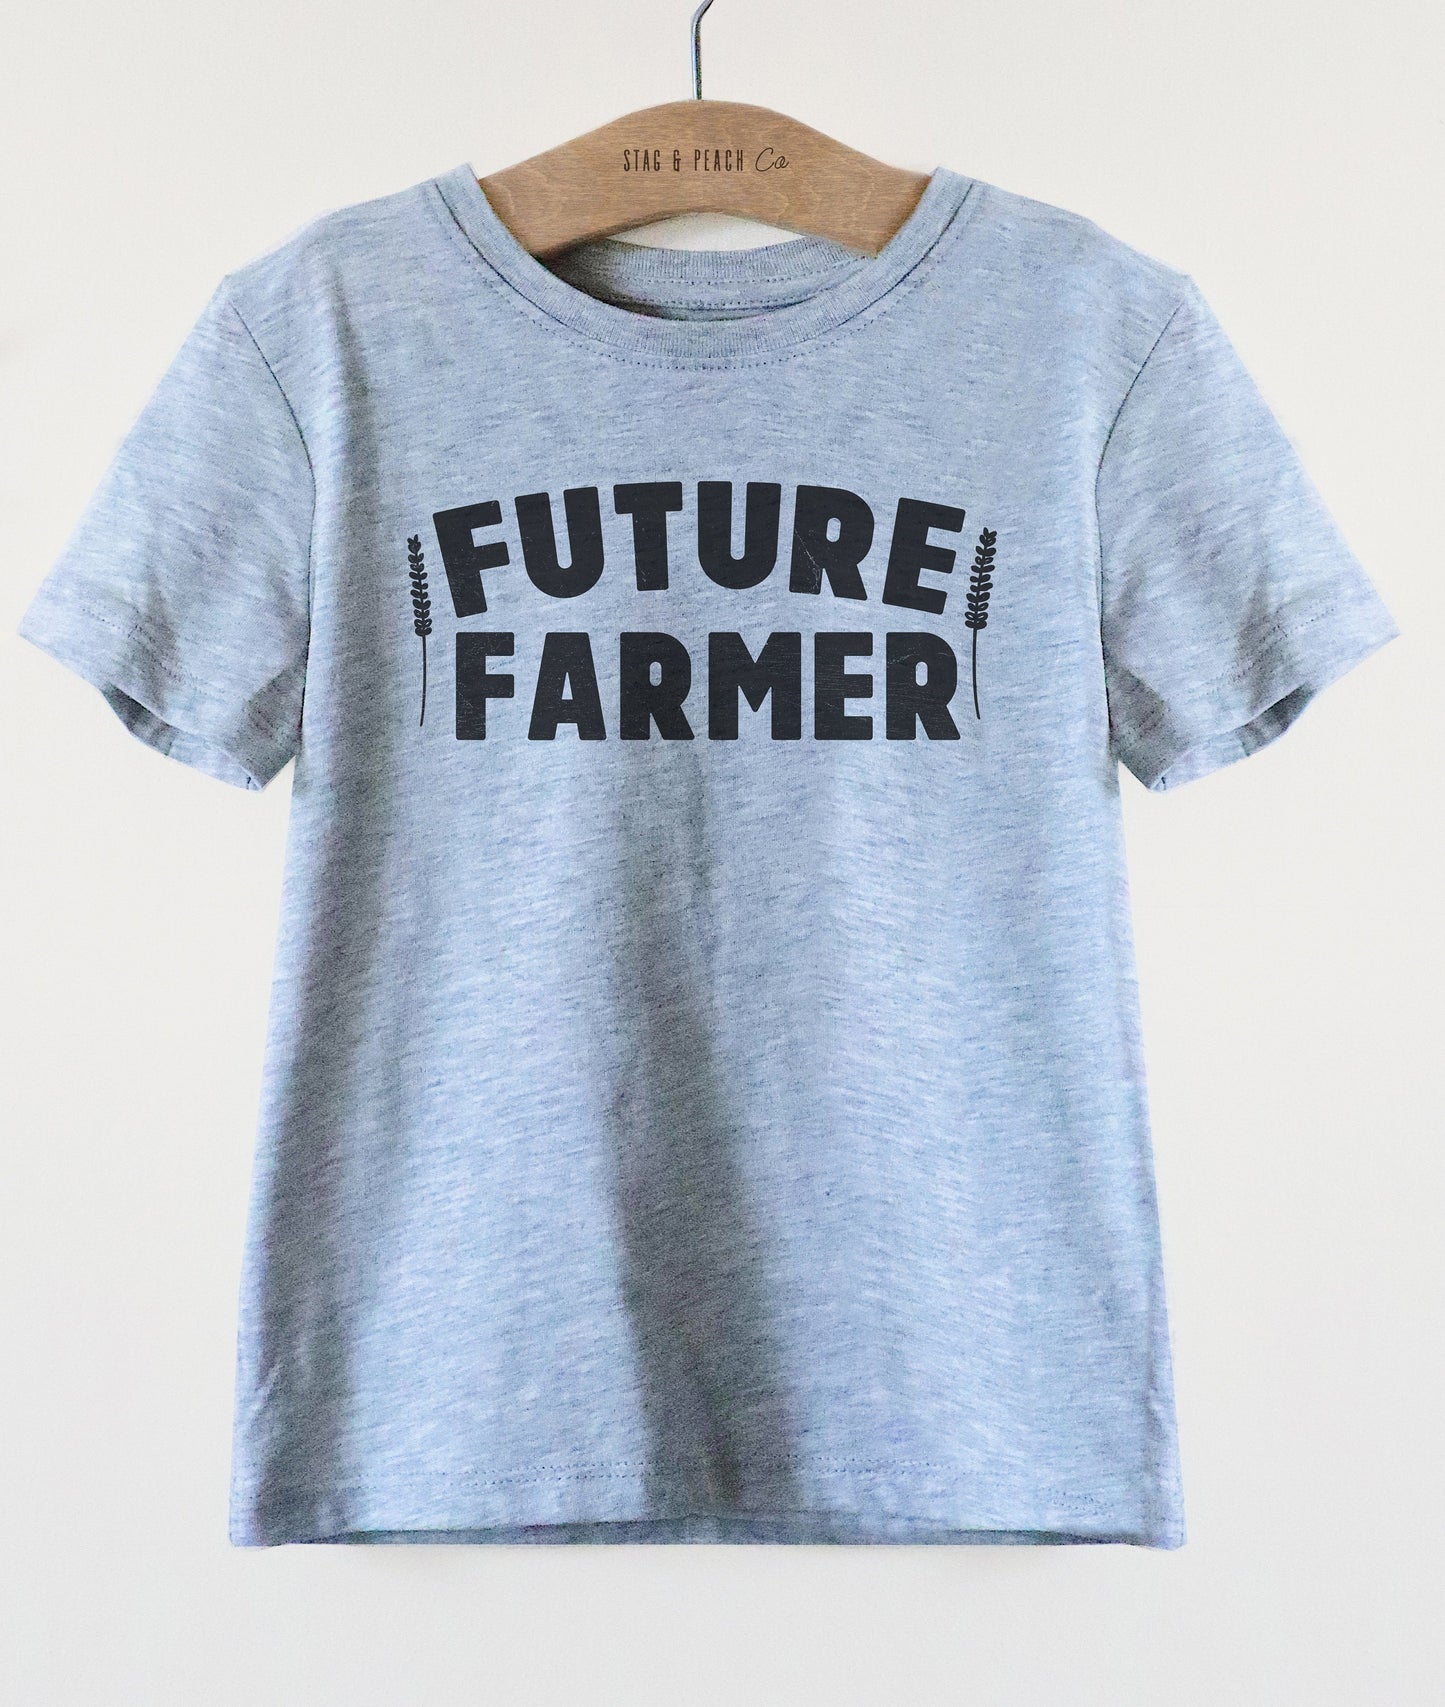 Future Farmer Kids Shirt - Farm Toddler Clothes, Farm Kids, Gift For Farmer, Farm Life Shirt, Farm Gift For Kids, Farm Birthday Shirt